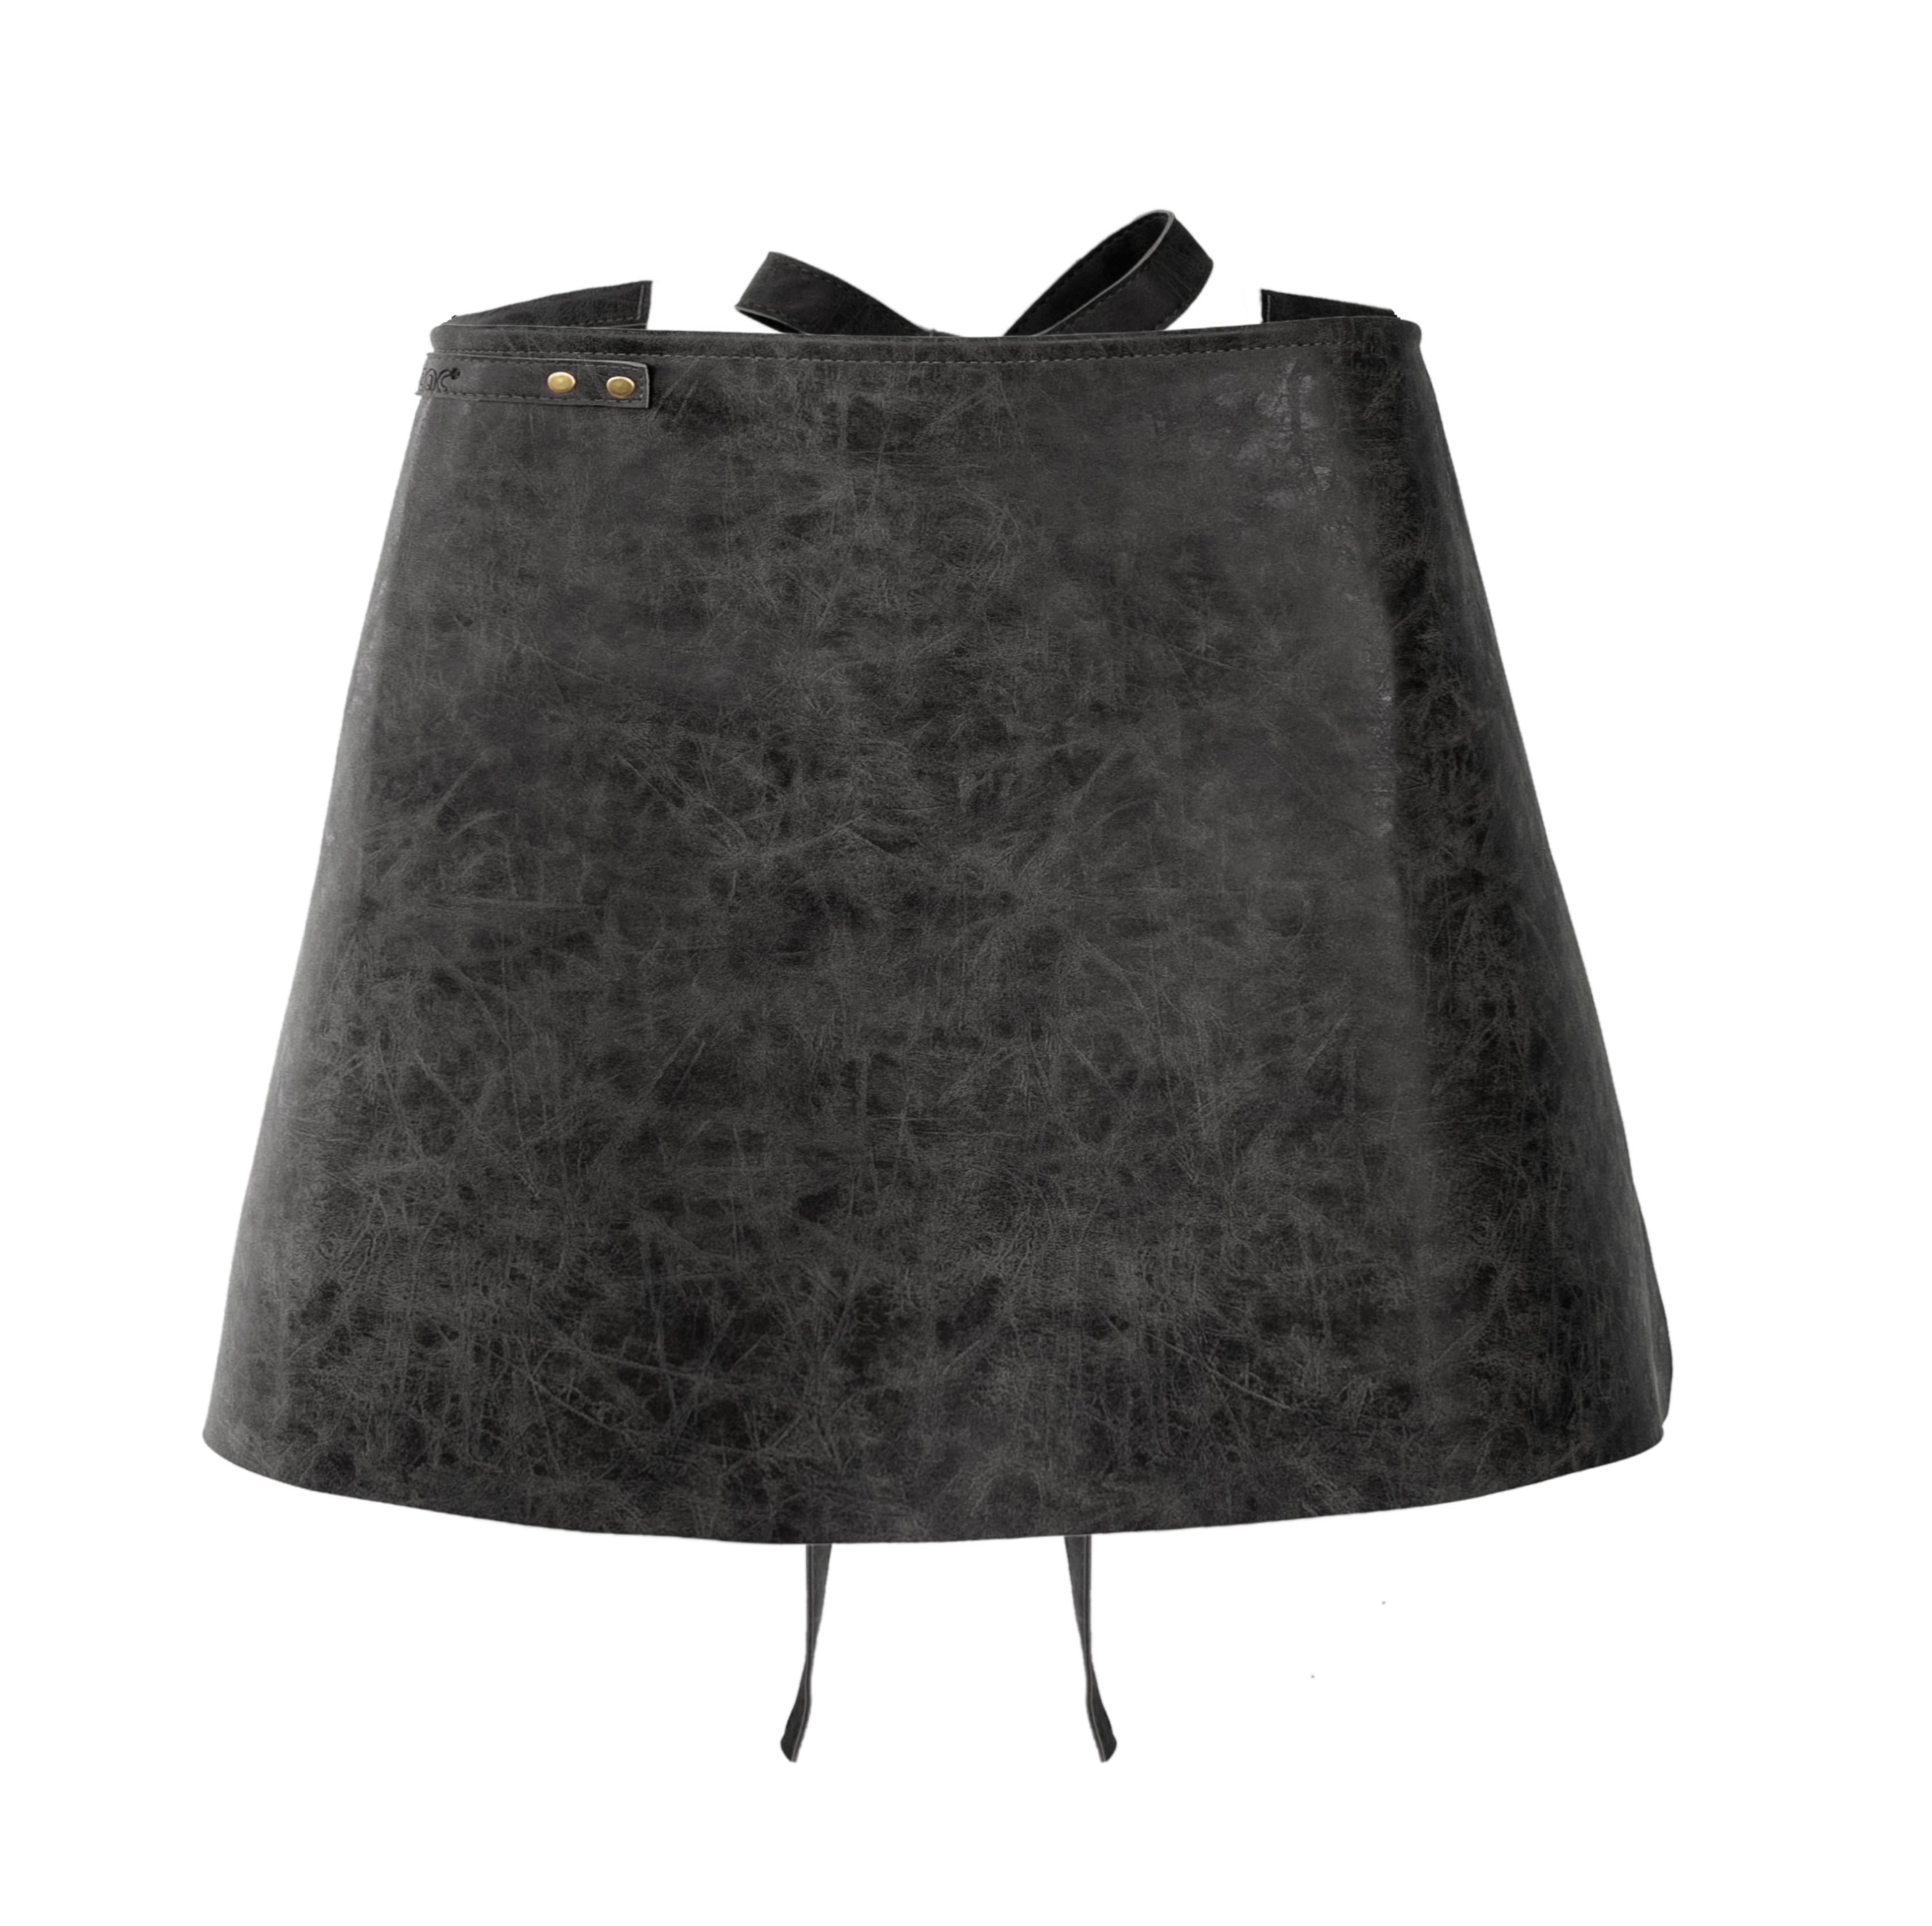 Schort TRUMAN Bistro (incl. Accesssory Bag),  70x45 cm, black